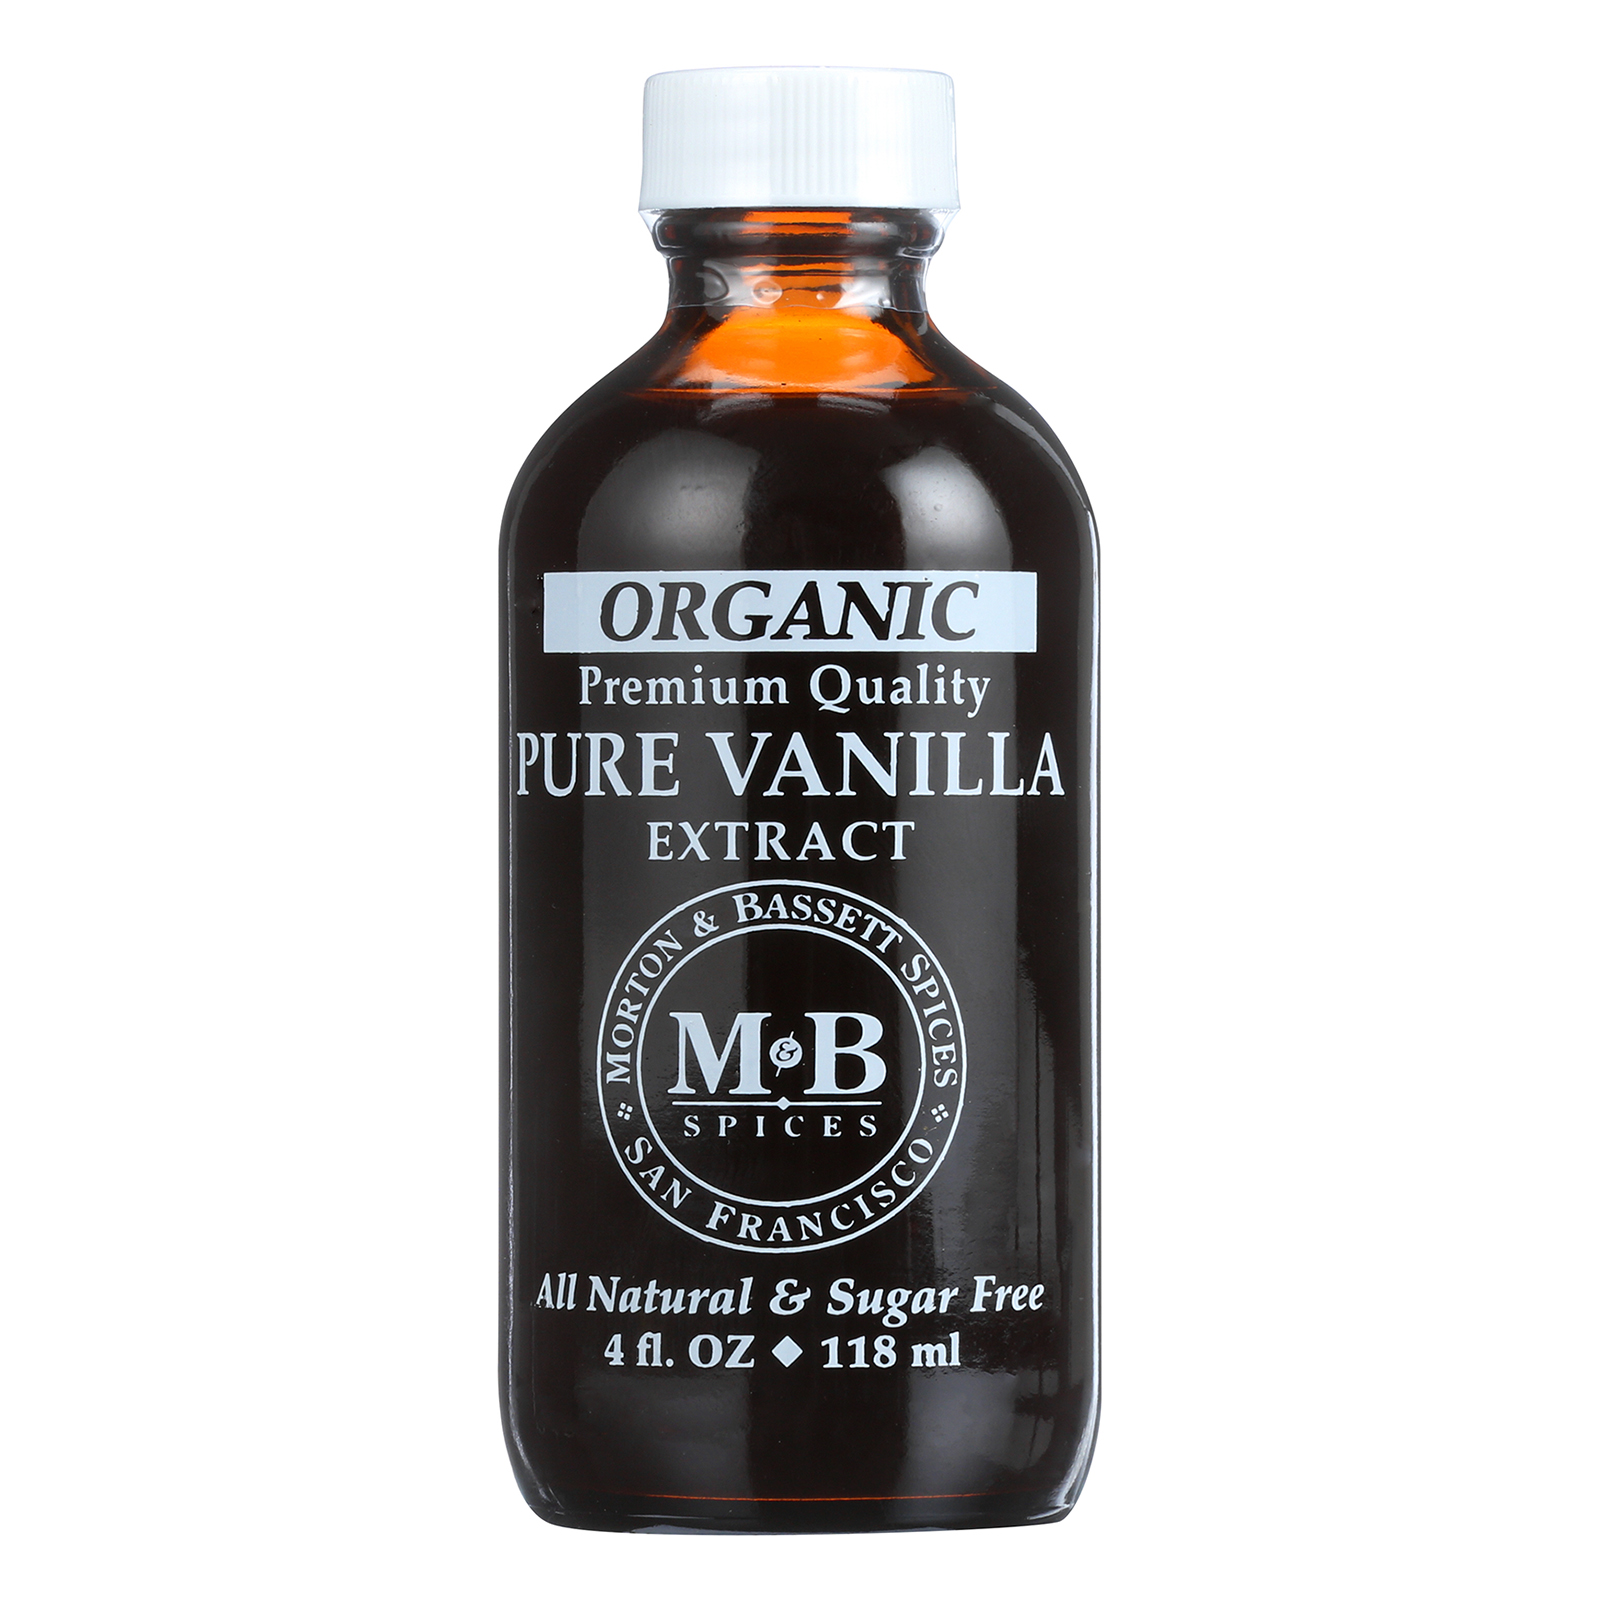 M&B Spices Organic Pure Vanilla Extract - 3개 묶음상품 - 4 OZ